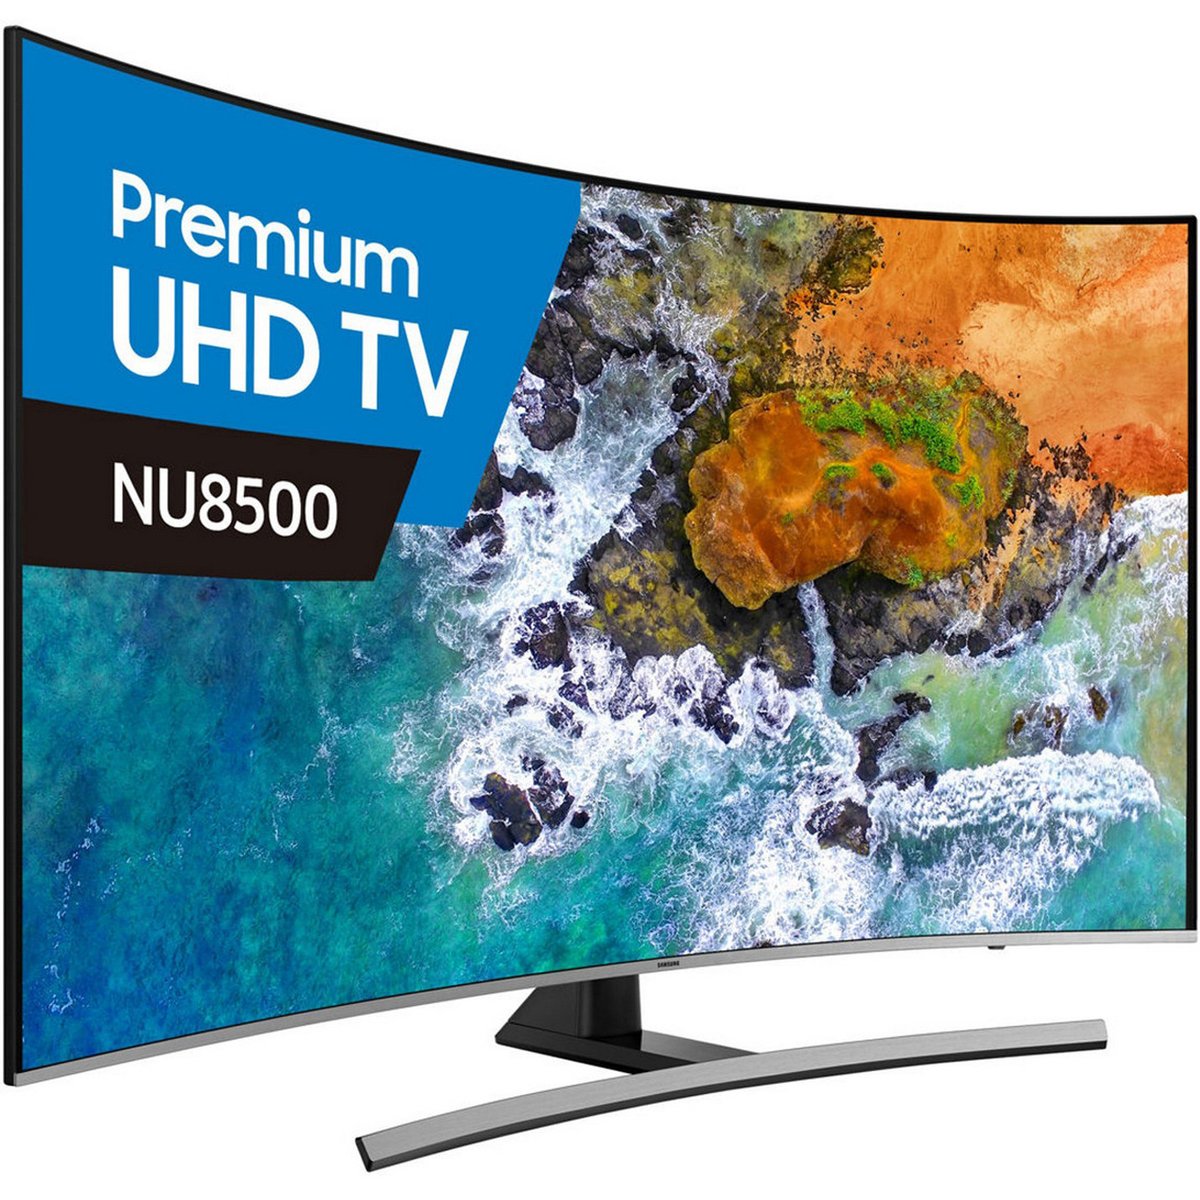 Samsung 4K Smart Premium Ultra HD Curved LED TV UA55NU8500 55inch